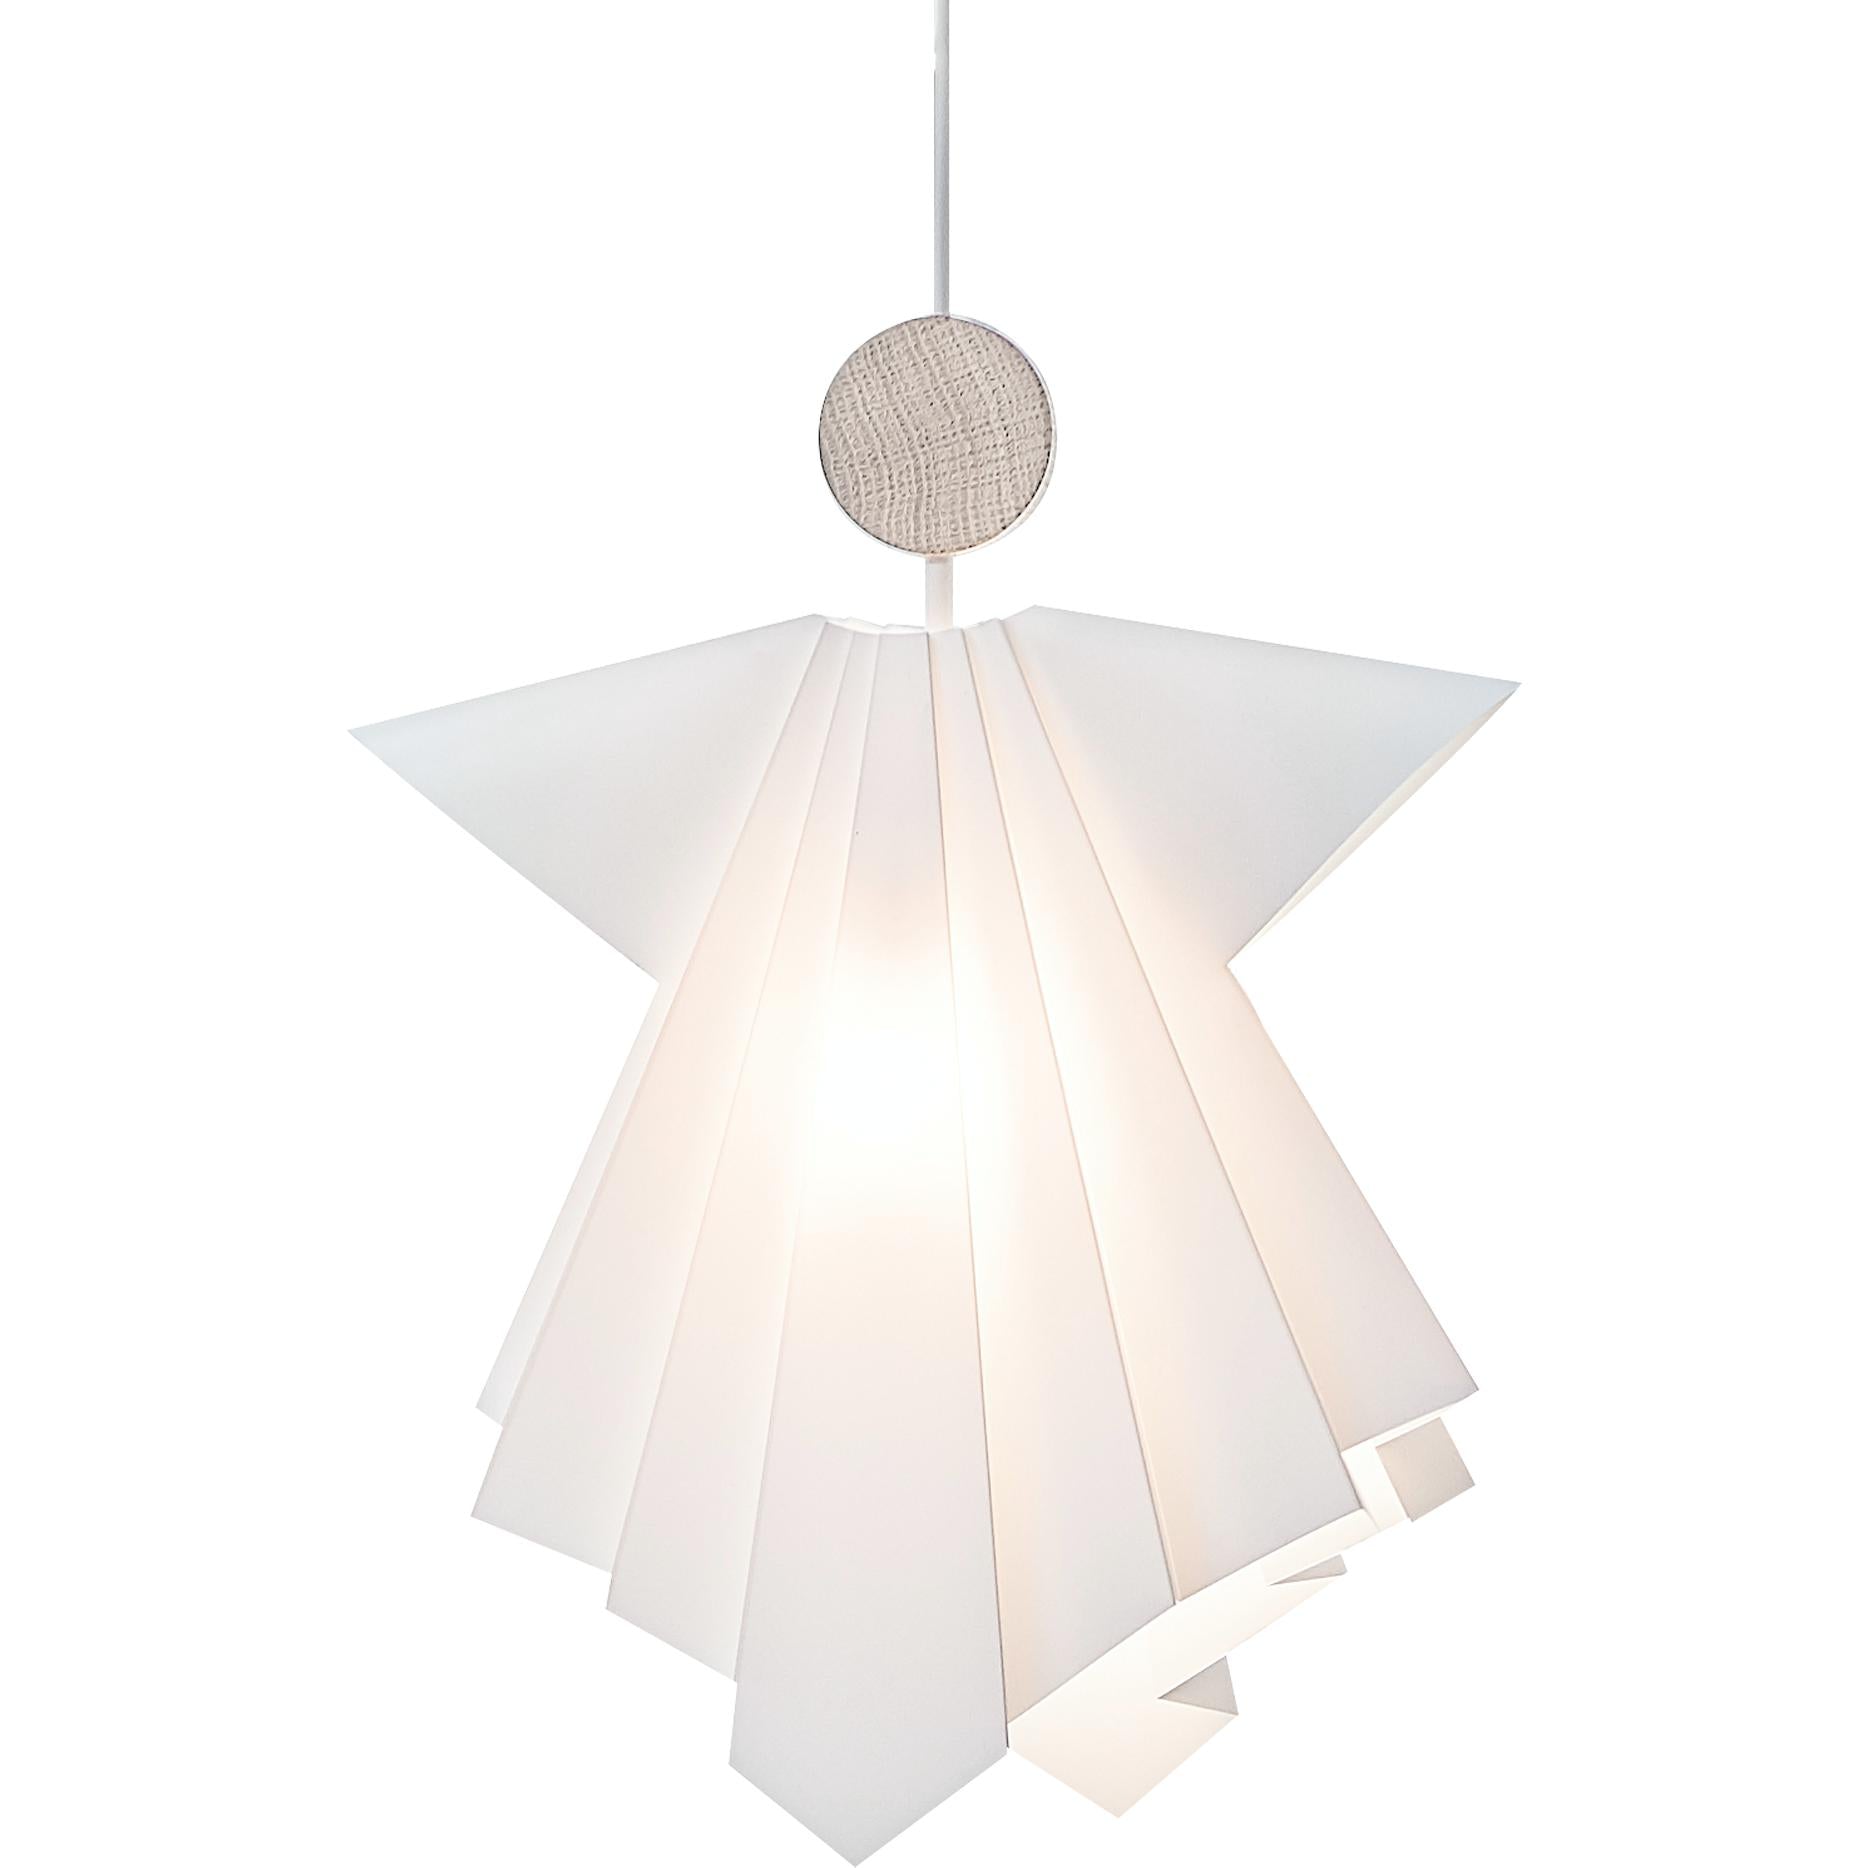 Le Klint Uriel Engel Pinging Lamp, XL